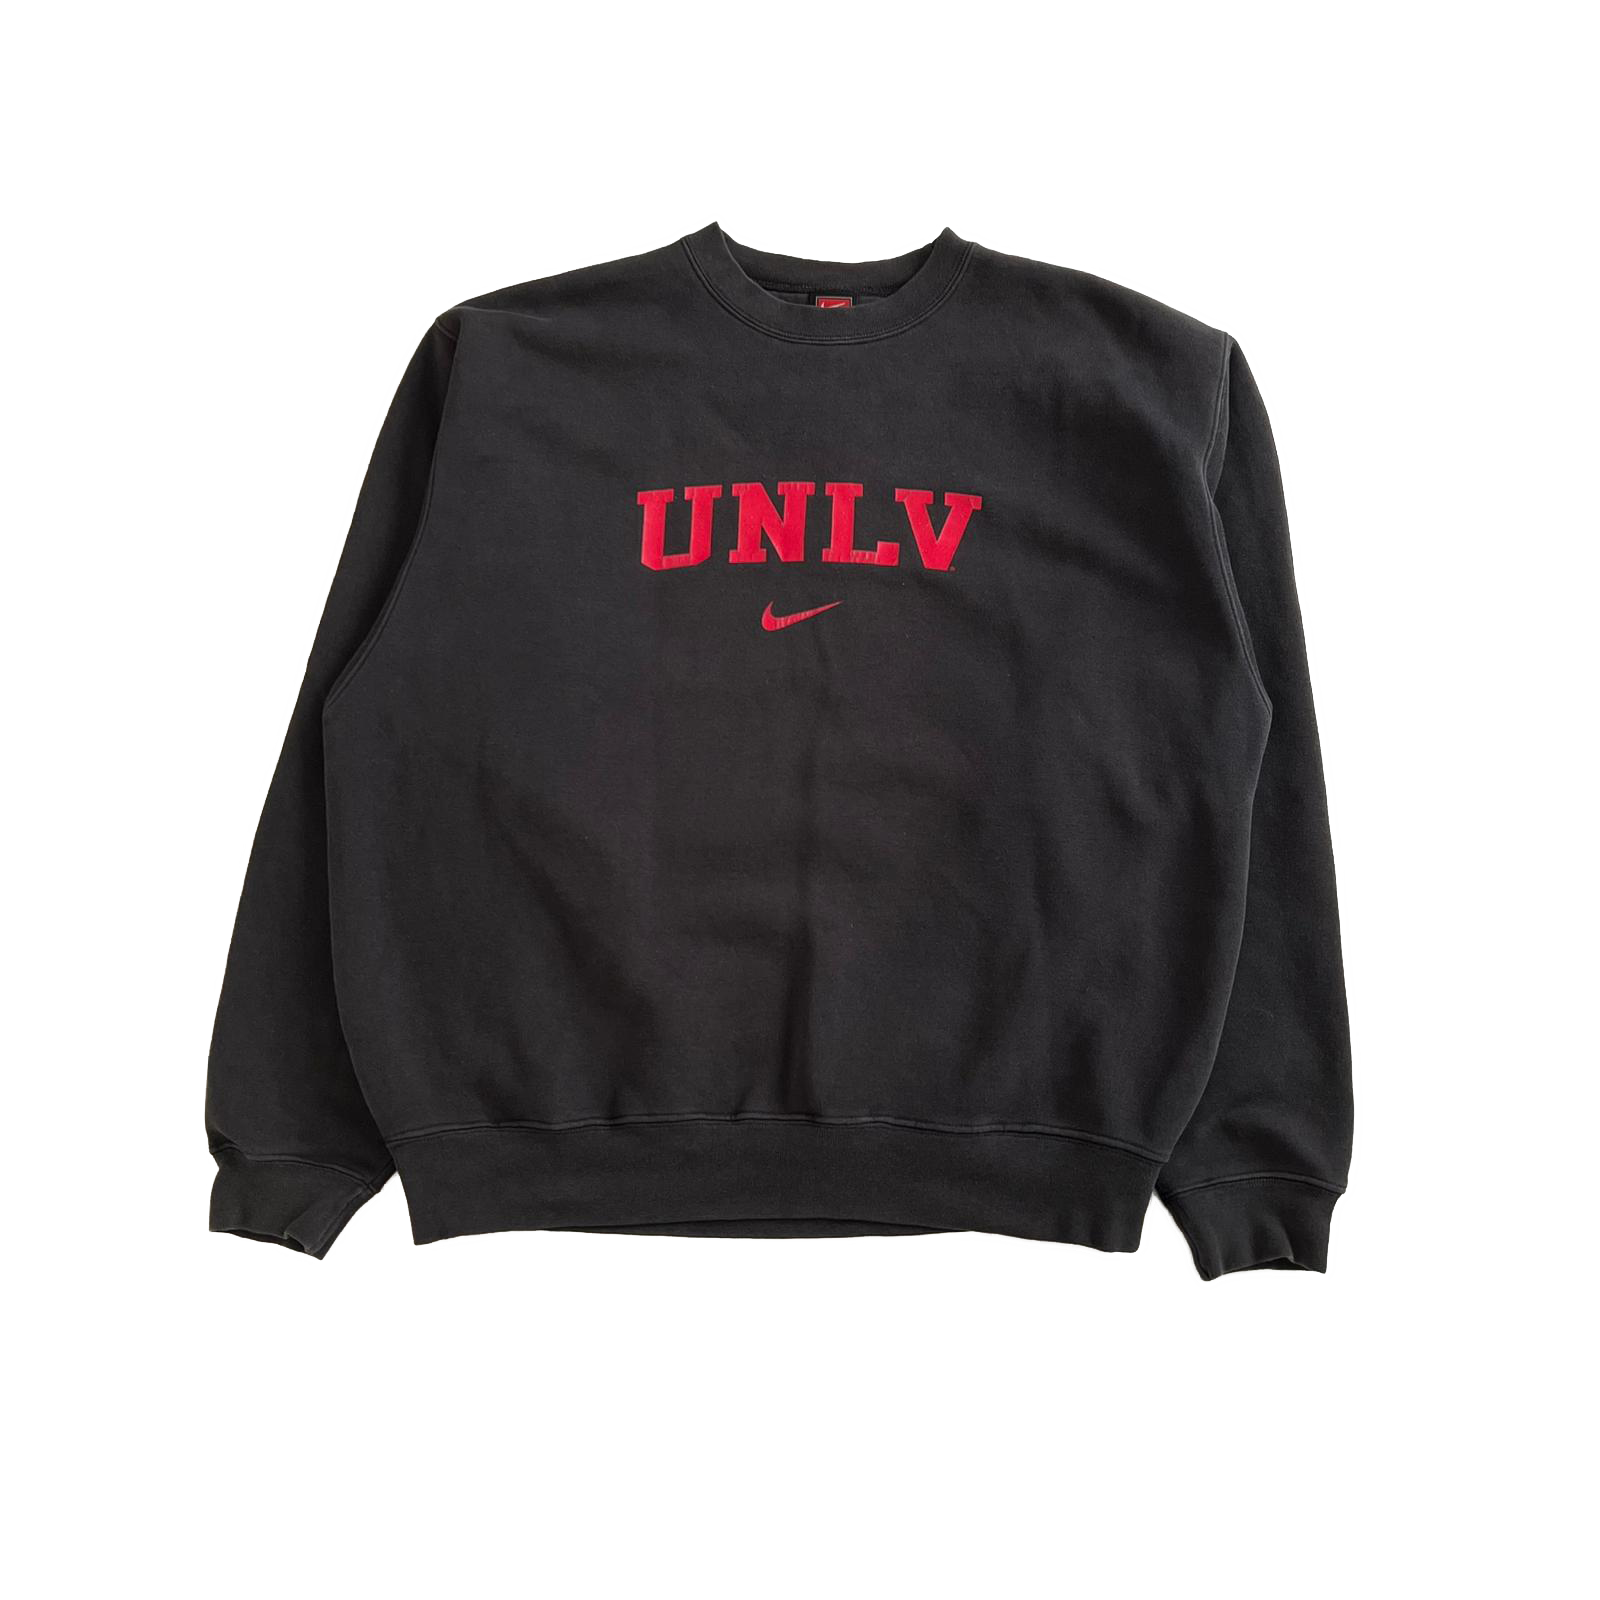 00's Nike UNLV sweatshirt